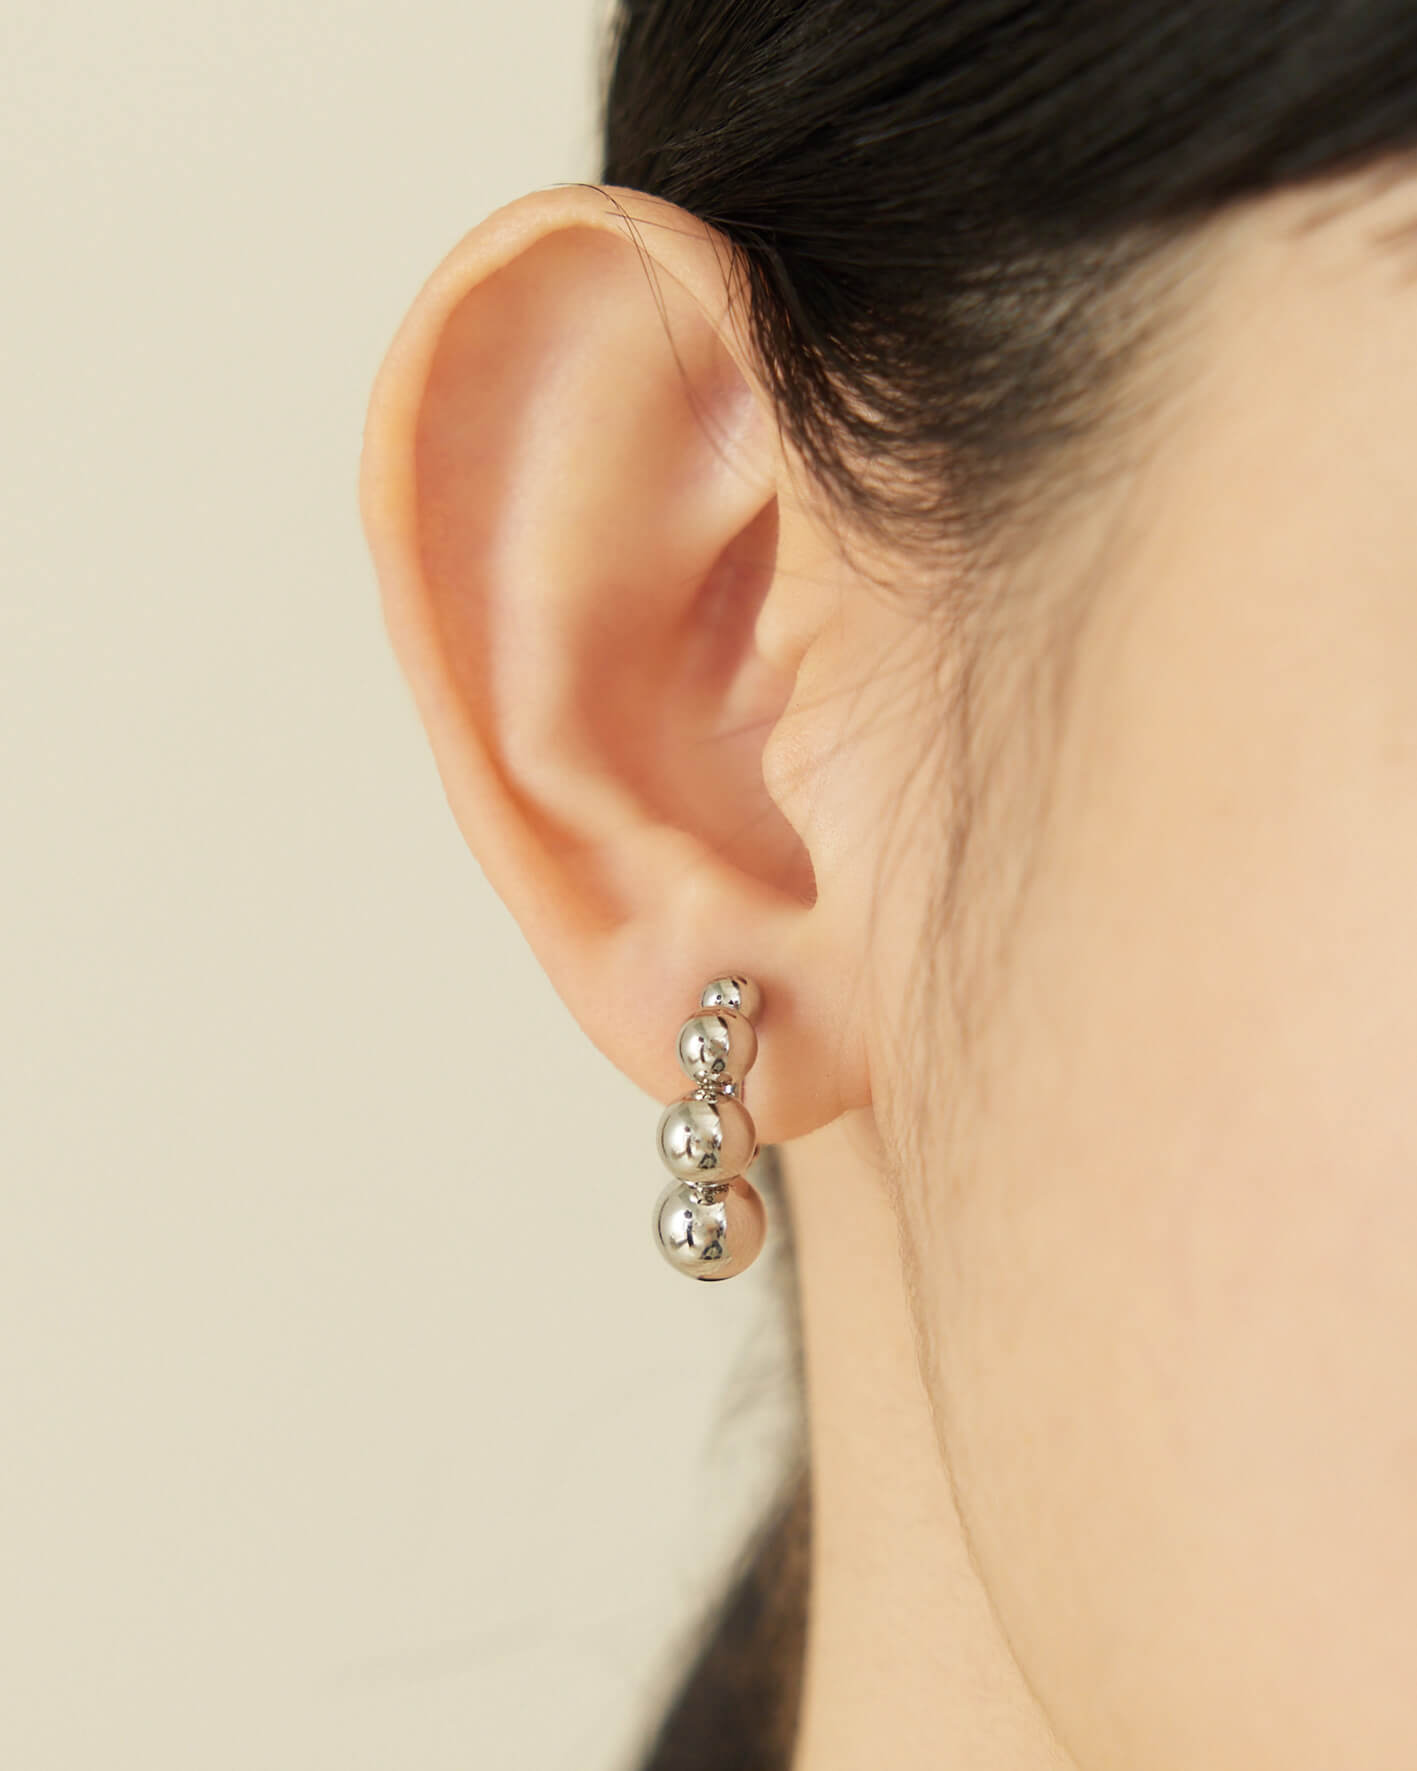 Eco安珂,韓國飾品,韓國耳環,垂墜耳環,螺旋夾耳環,可調式耳夾耳環,螺旋夾垂墜耳環